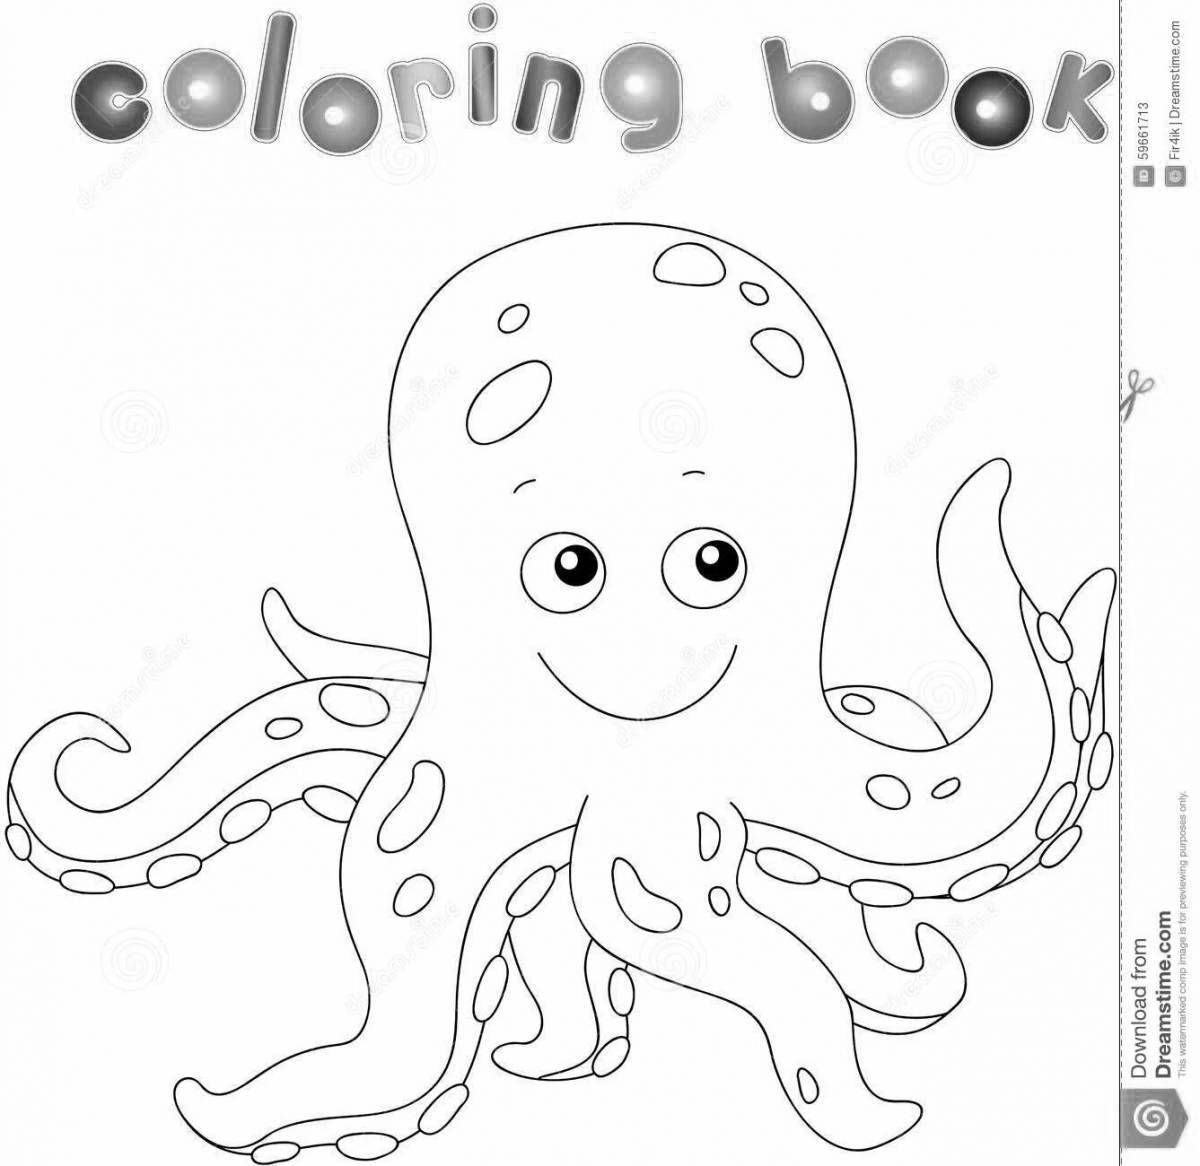 Fun coloring octopus changeling